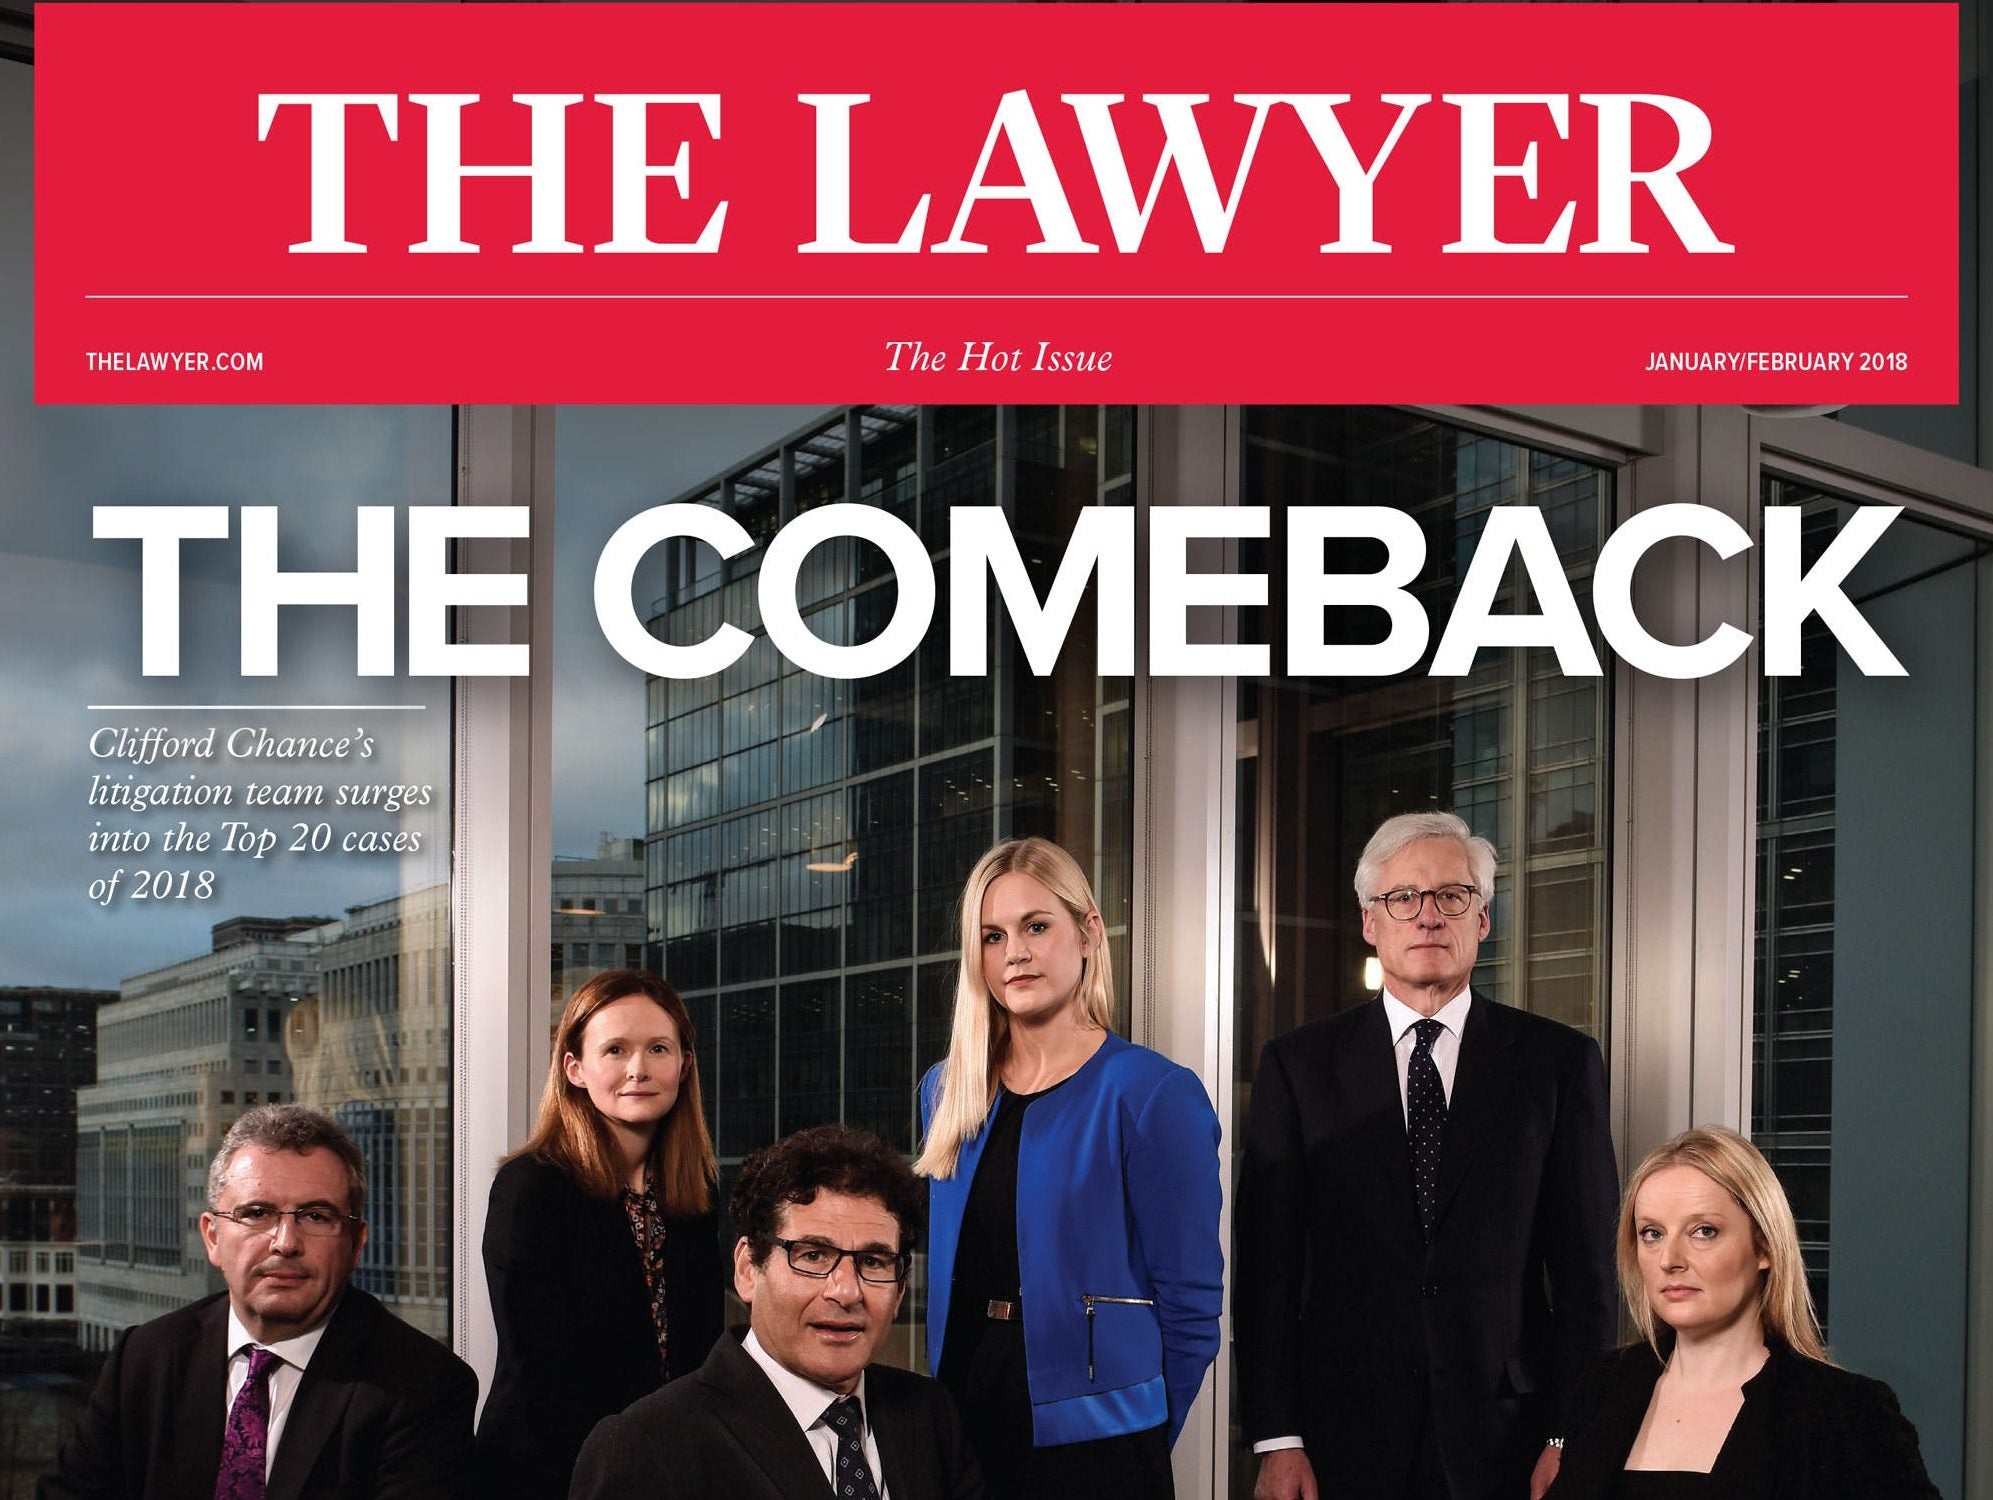 Centaur says The Lawyer magazine no longer for sale as it changes mind despite offers